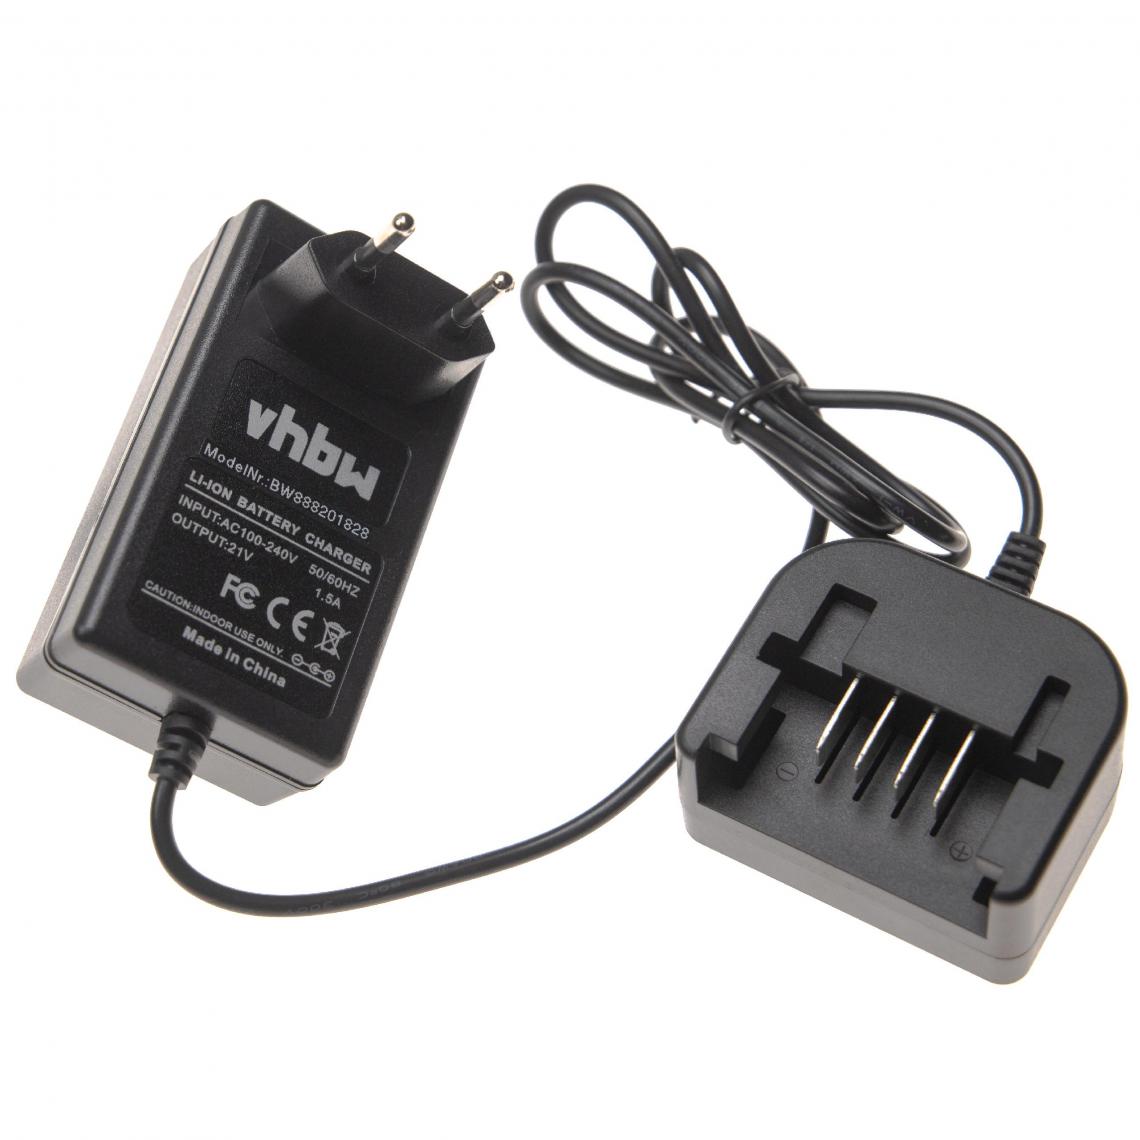 Vhbw - vhbw Chargeur compatible avec Rockwell RS2314, RS2323 batteries Li-ion d'outils (20V) - Clouterie